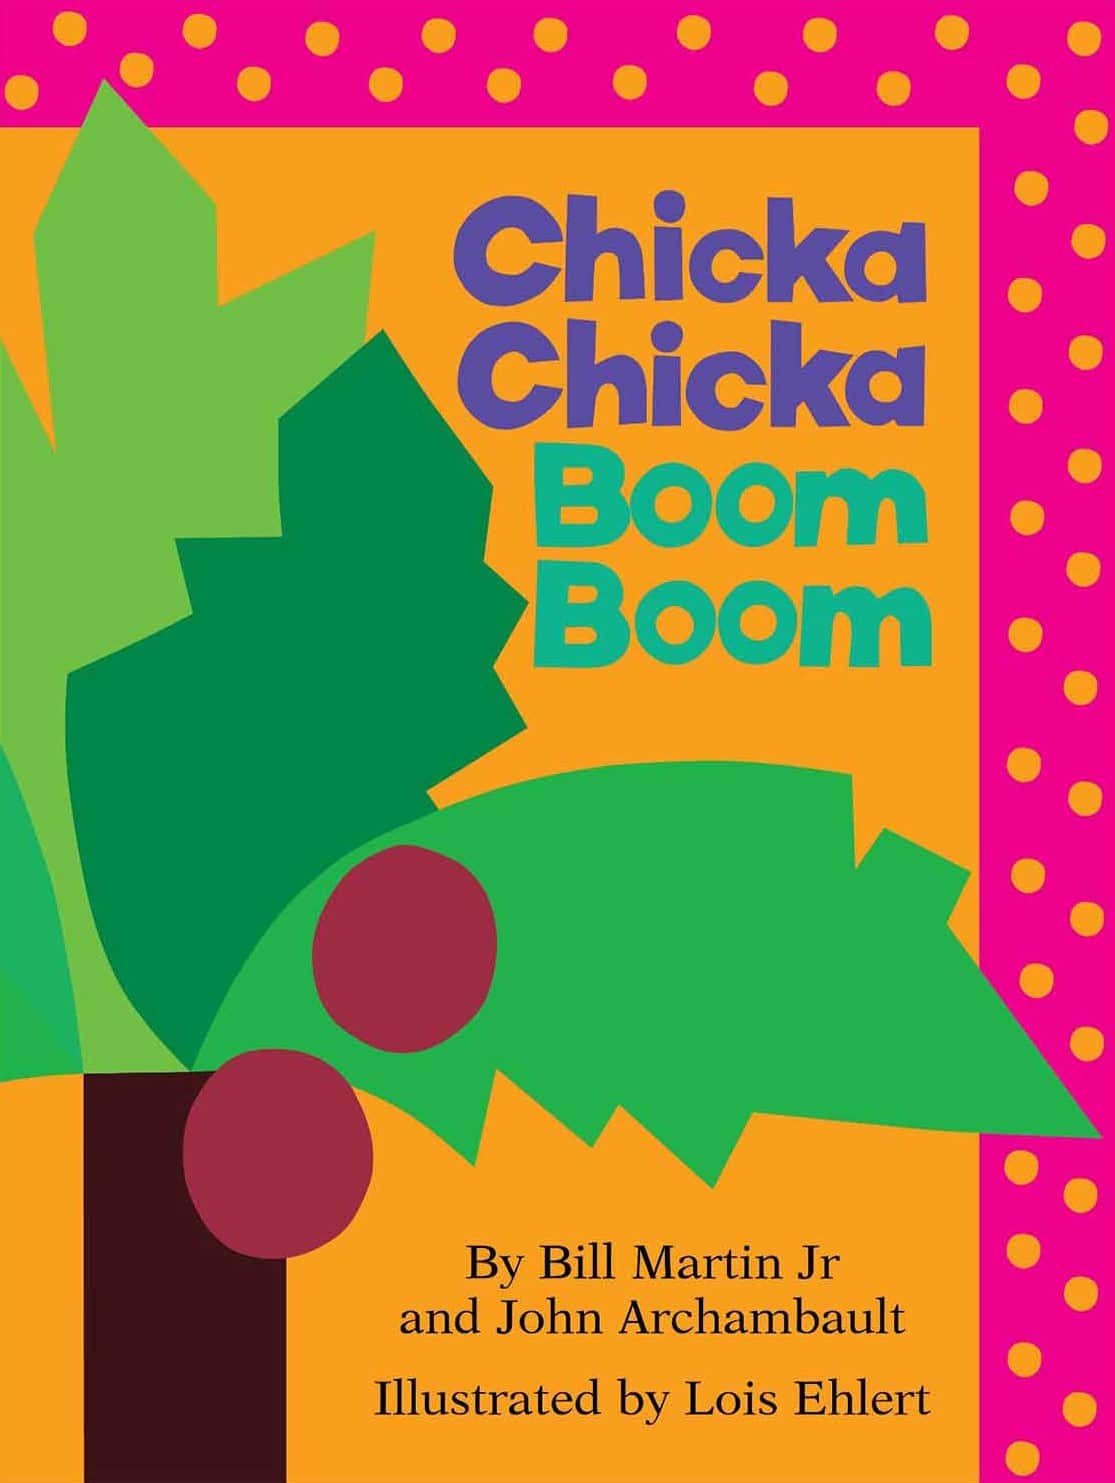 Chicka Chicka Boom Boom by Bill Martin Jr and John Archambault infant book